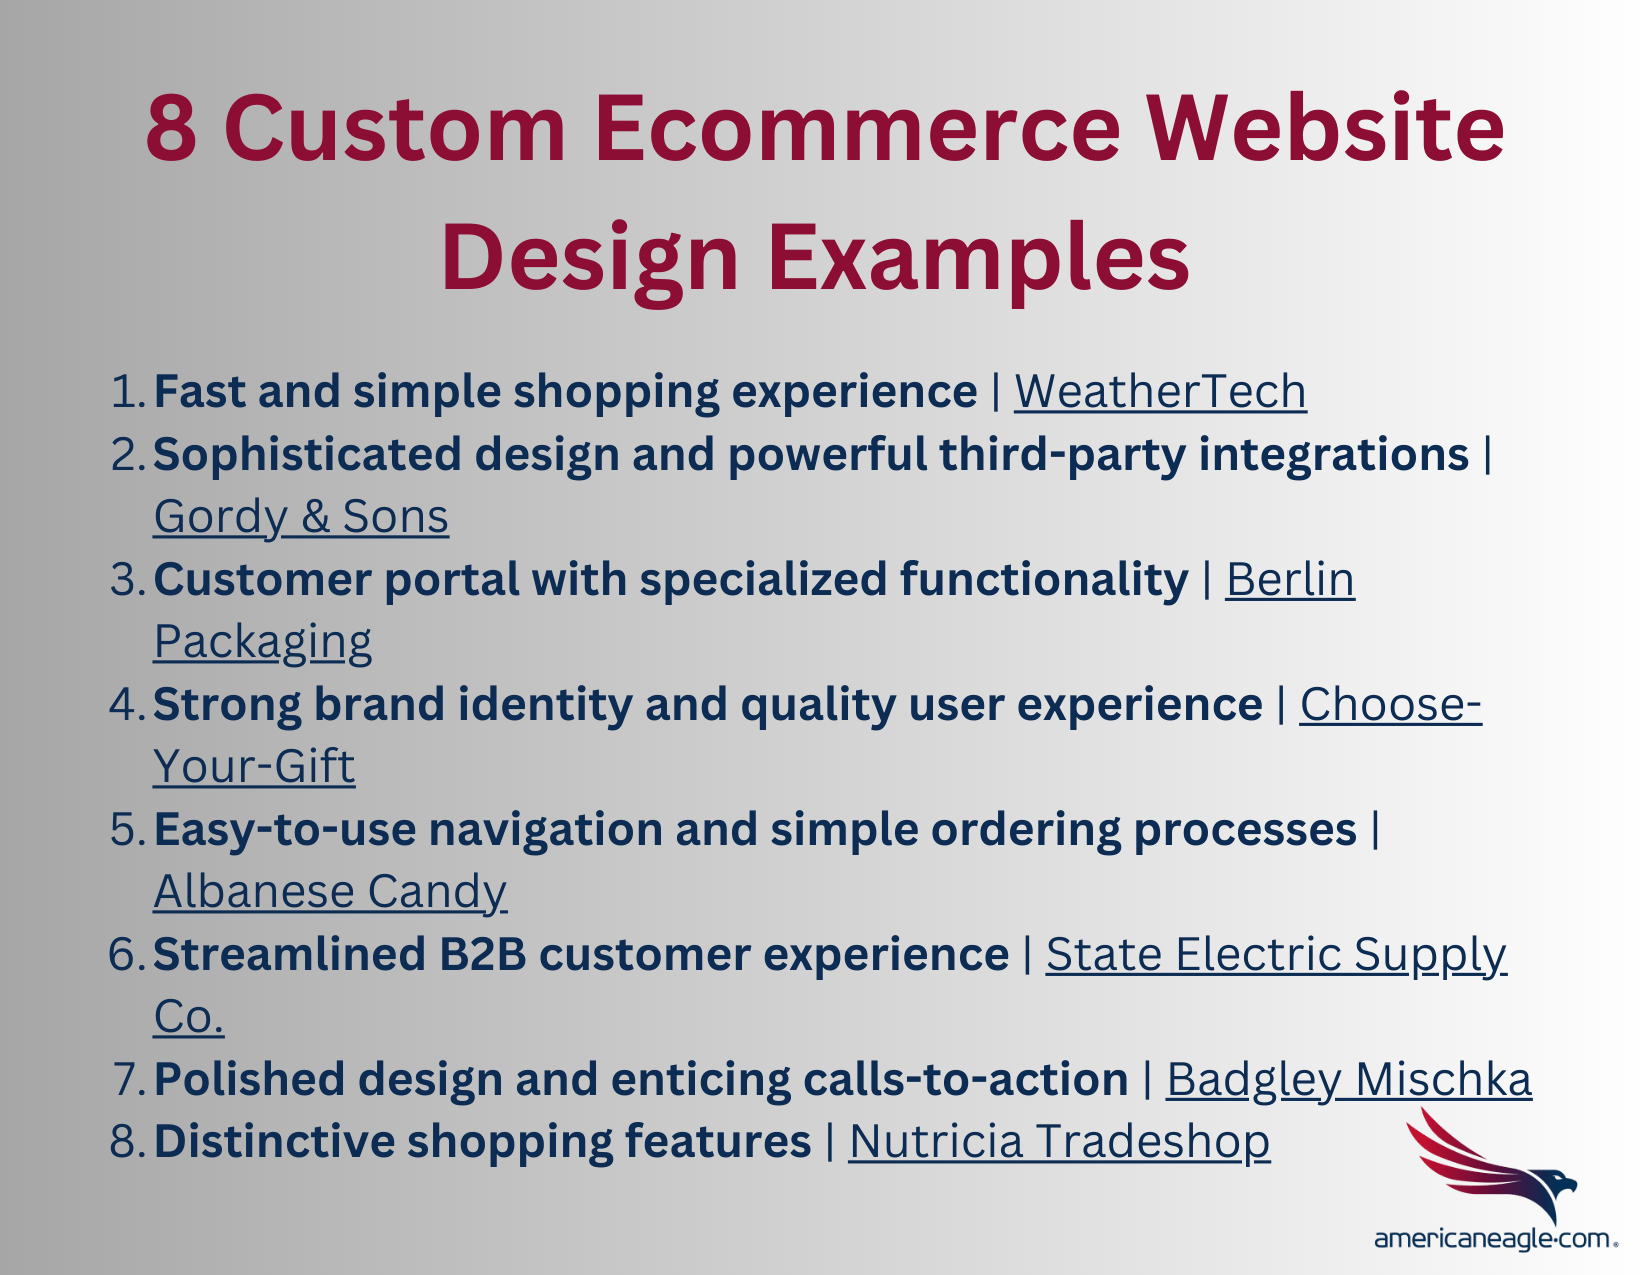 8 custom ecommerce website design examples